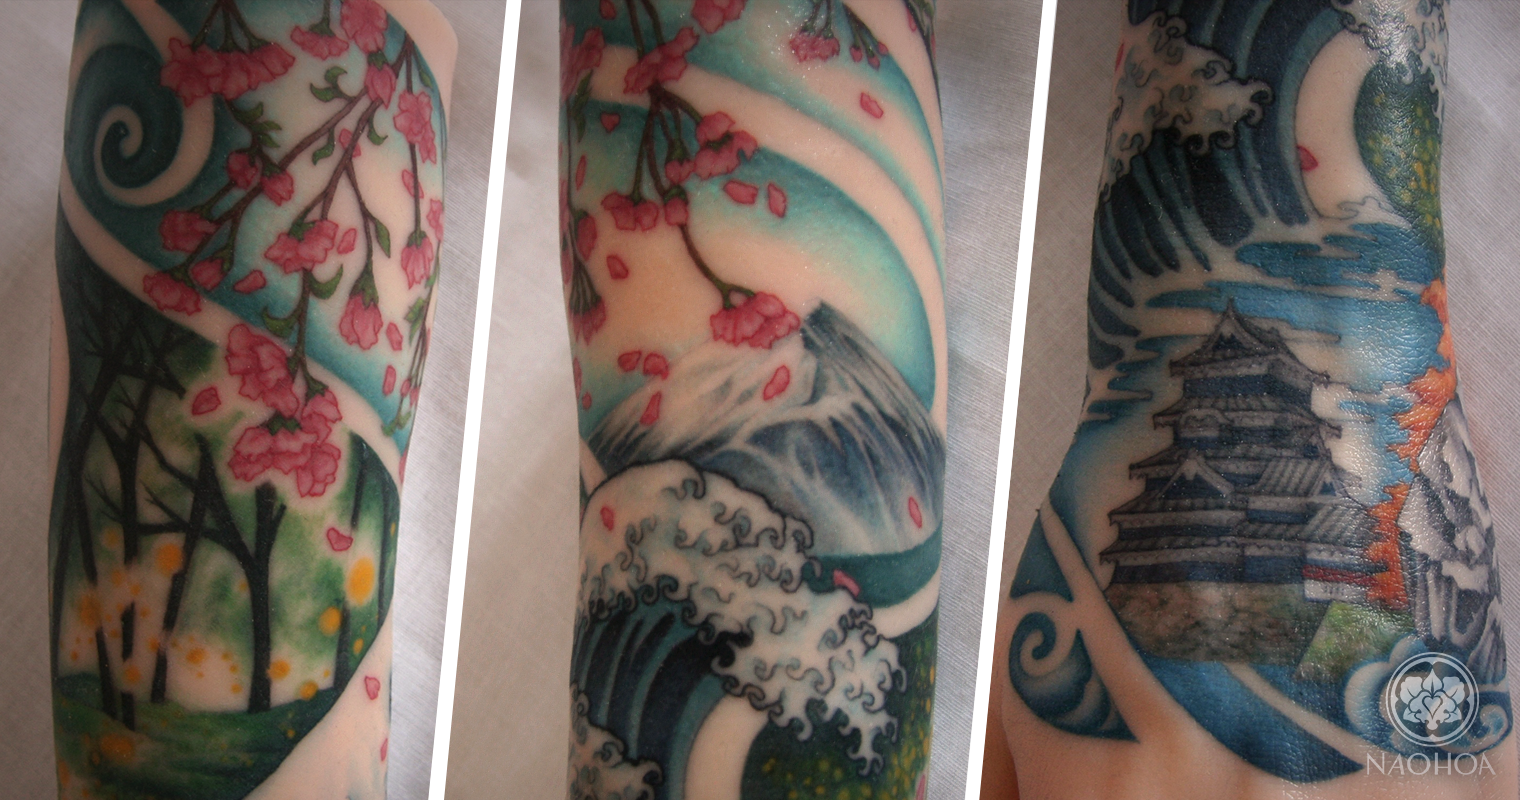 NAOHOA Japanese Sleeve Tattoo called, "Four Seasons" by Naomi Hoang at NAOHOA Luxury Bespoke Tattoos, Cardiff, Wales (UK).